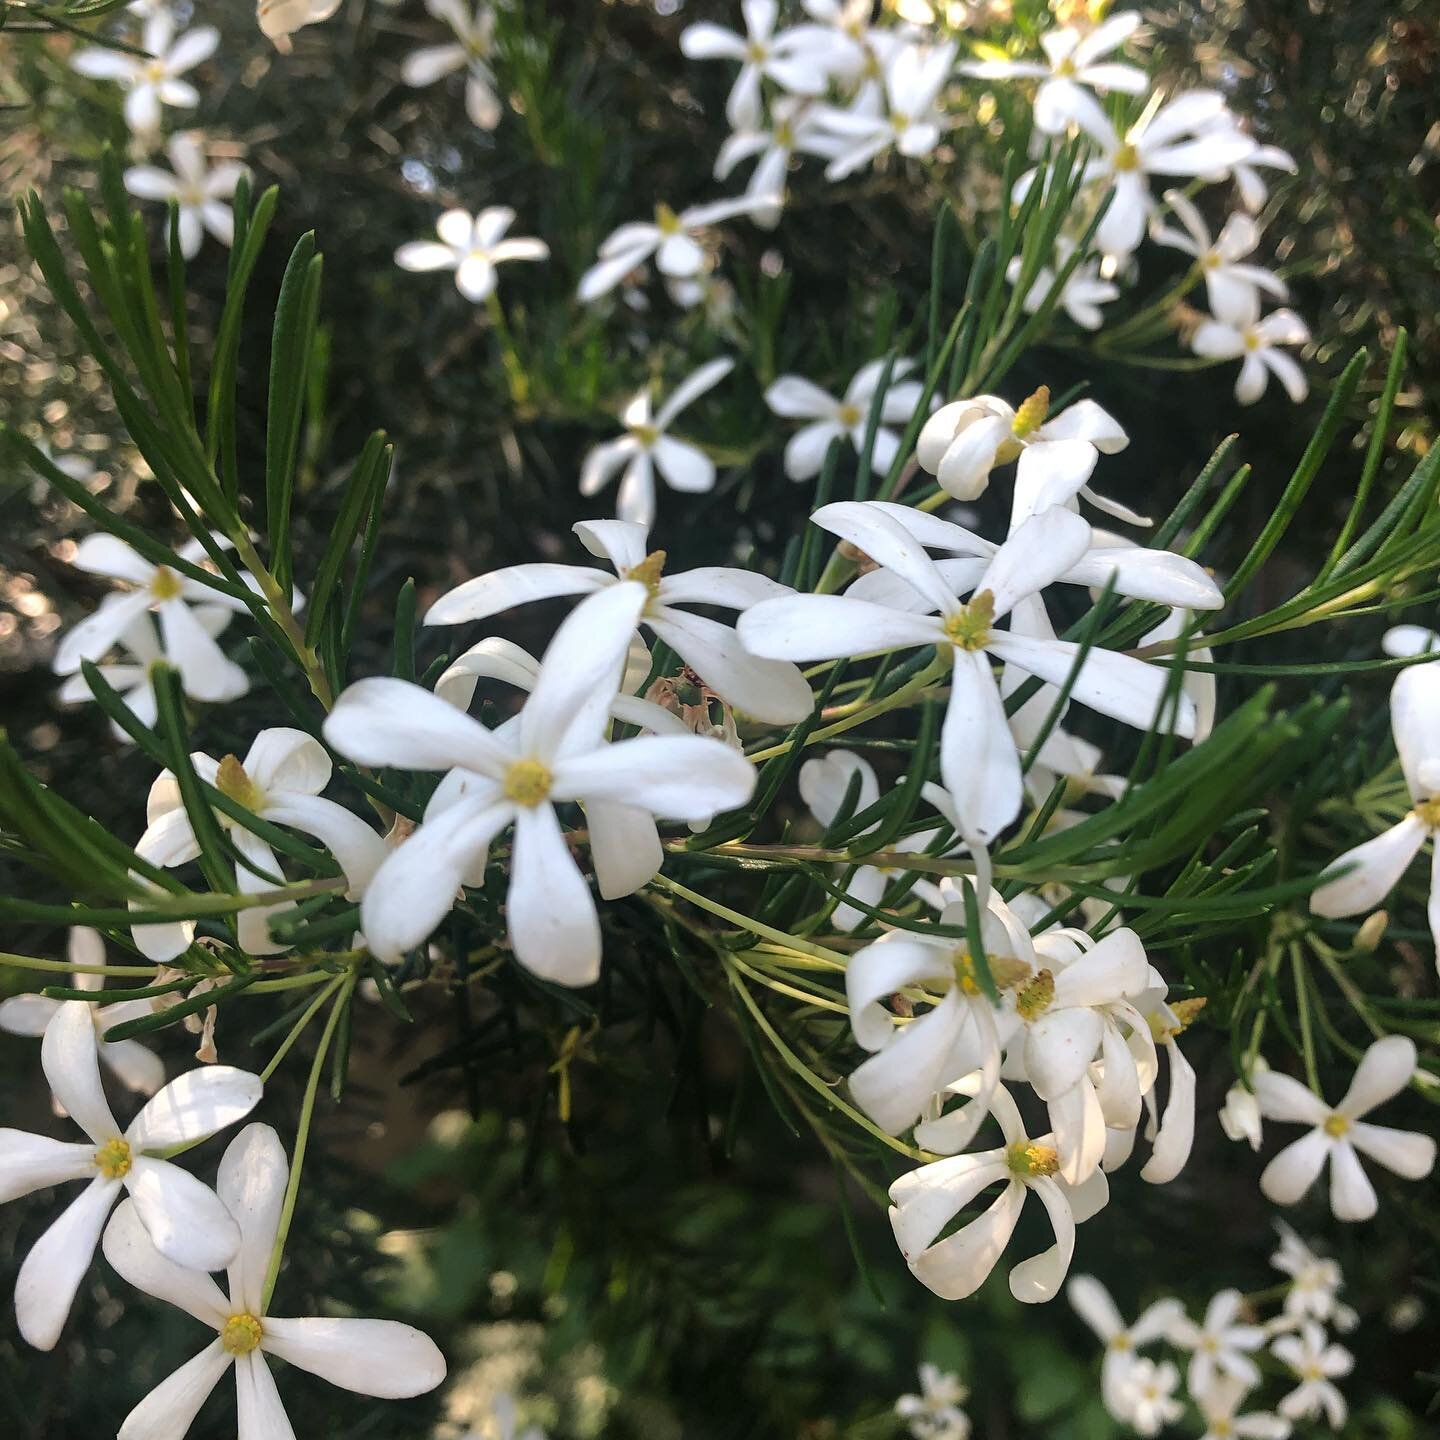 Wedding Bush flowering in Perth&rsquo;s heat. Pretty and calm. Breathe, connect, ground. 

#massageperth #pregnancymassageperth #subiacomassage

#